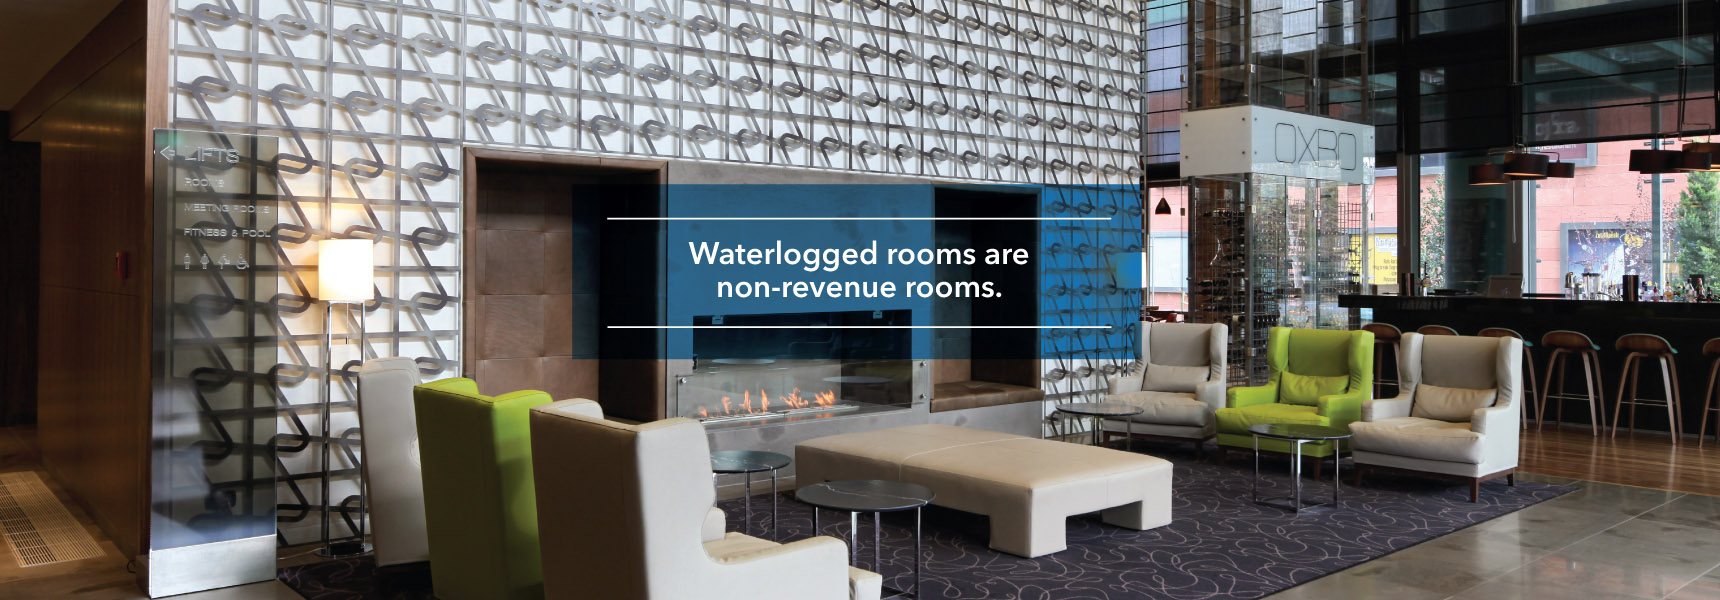 Waterlogged rooms are non-revenue rooms.